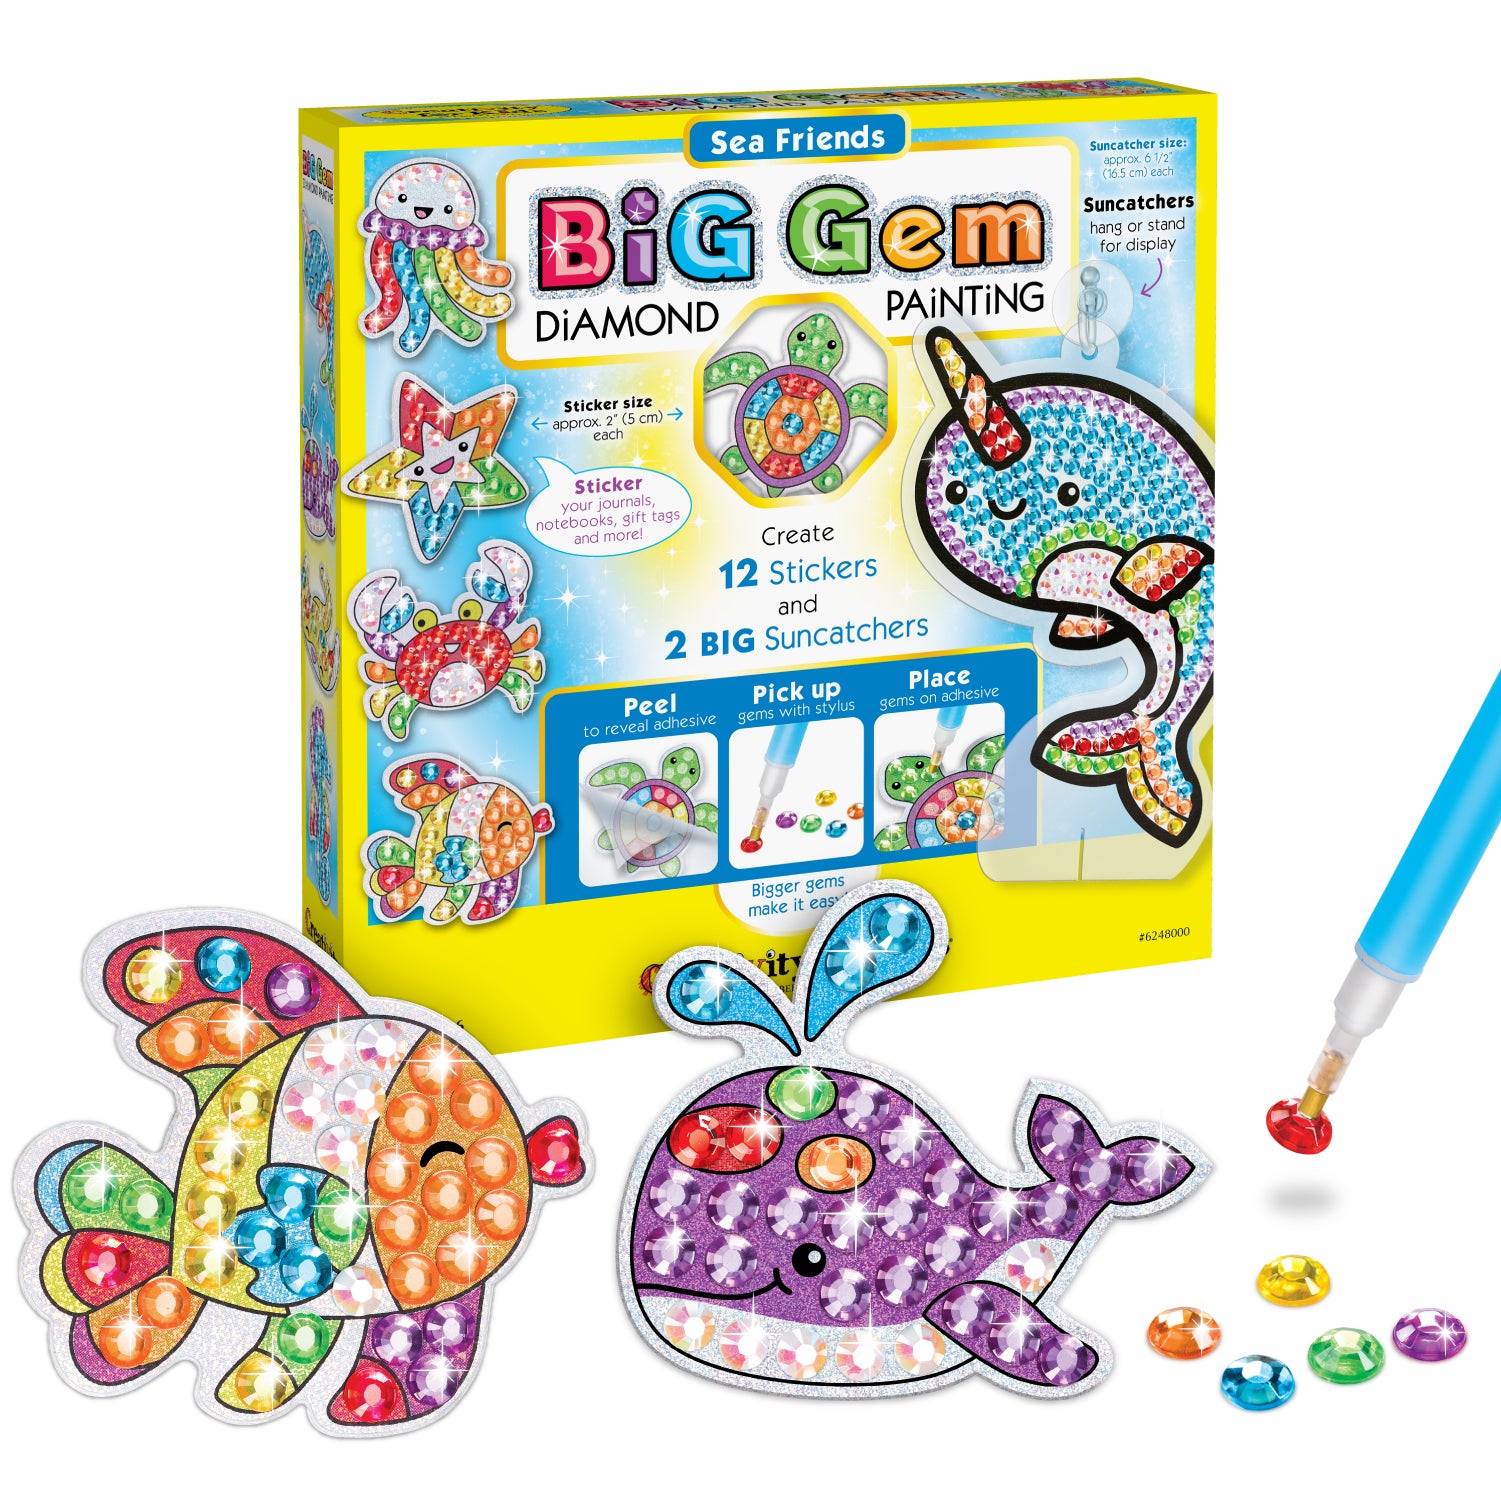 Creativity for Kids Big Gem Diamond Painting Kit - Under the Sea